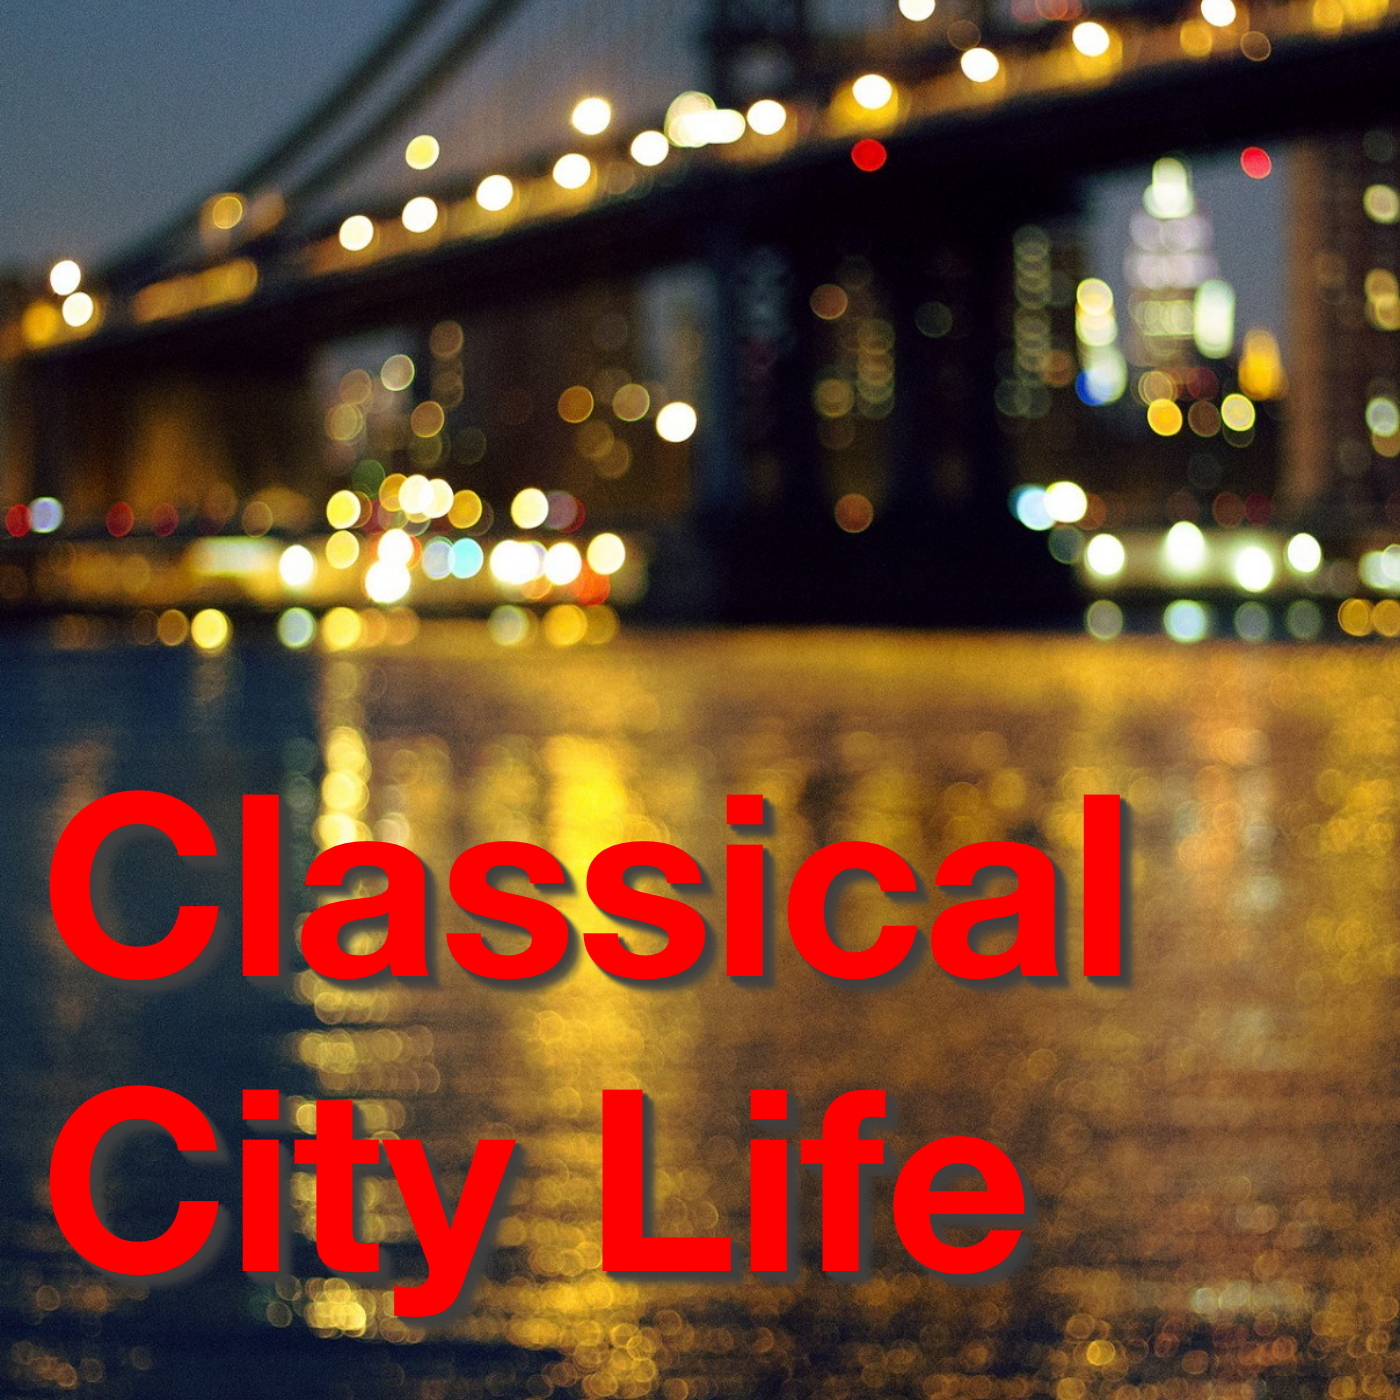 Classical City Life